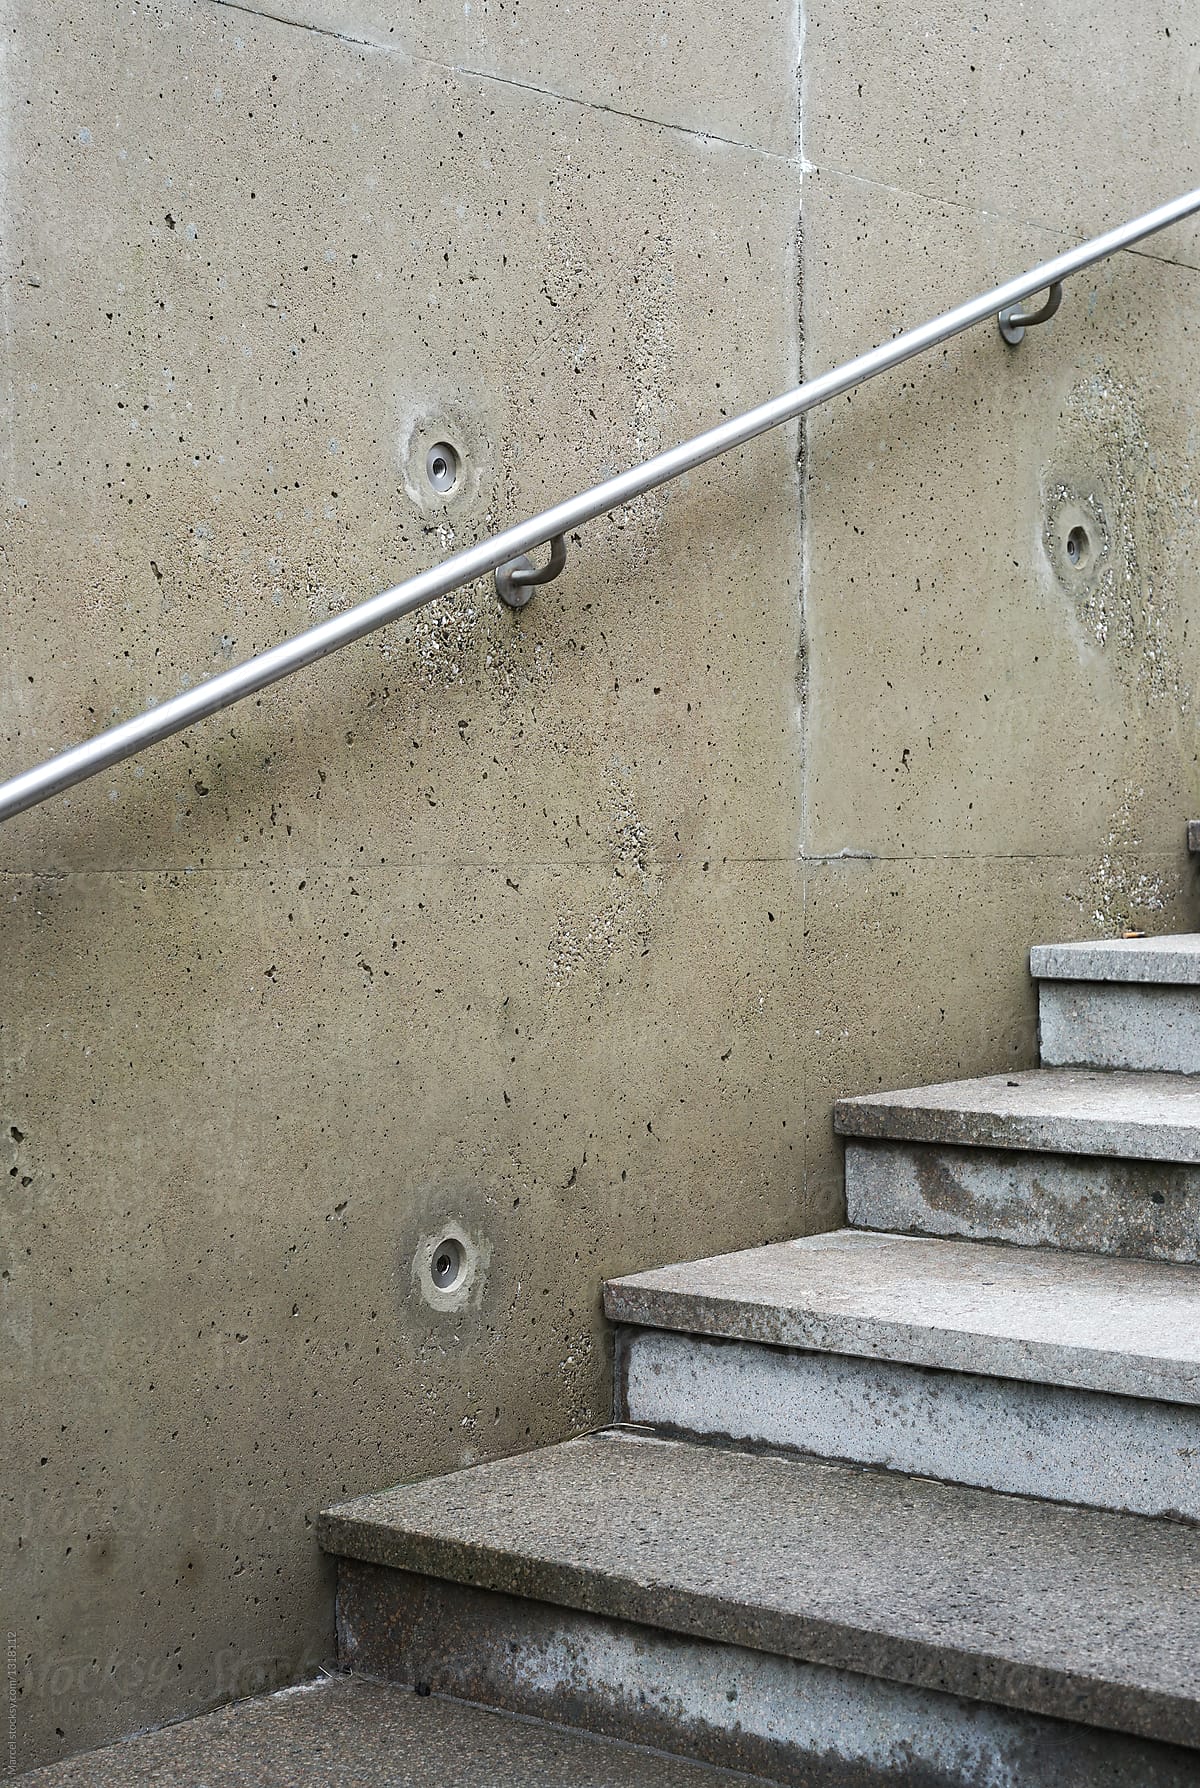 Concrete stairway